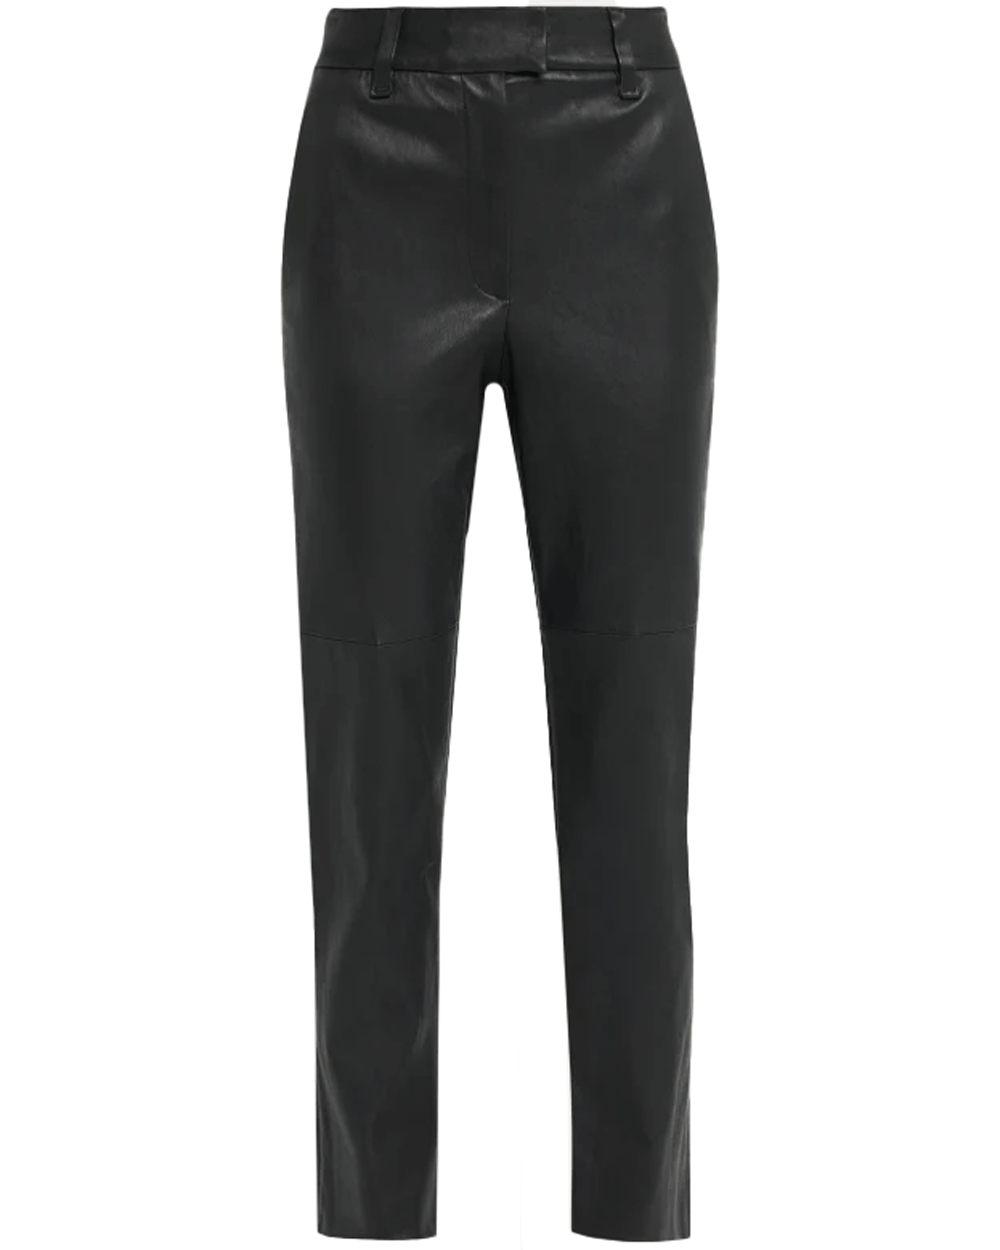 Black Stretch Leather Pant